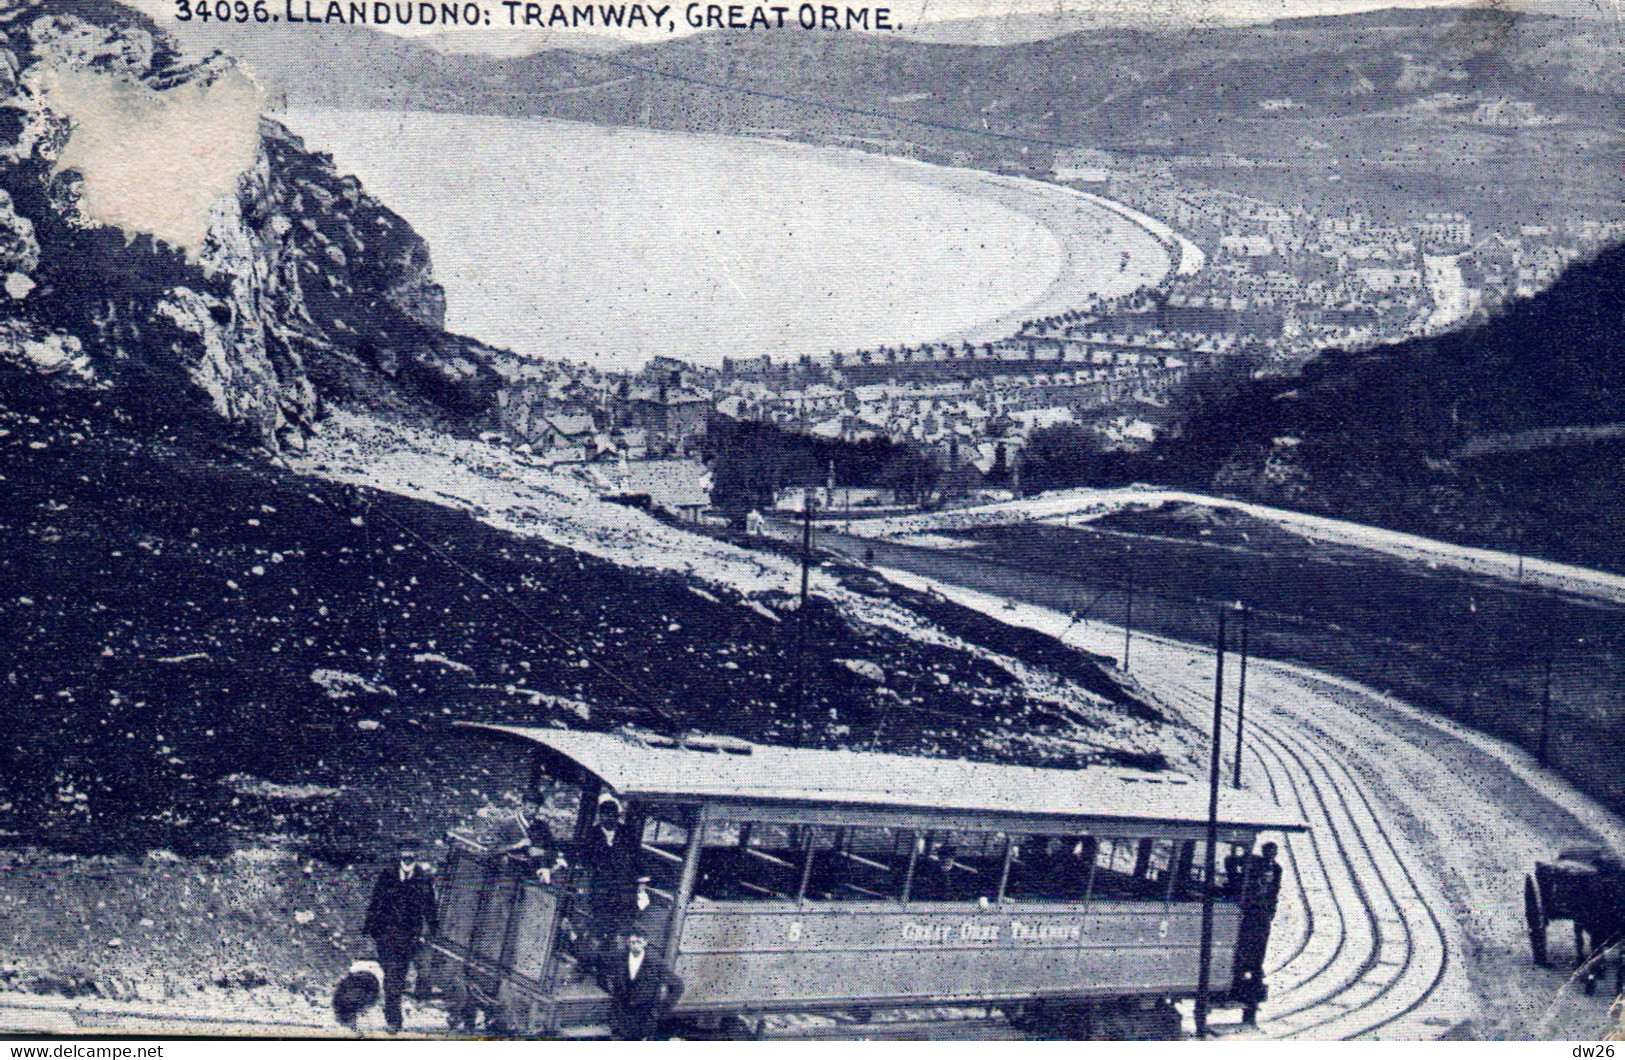 Llandudno (Walles, Caernarvonshire) - Tramway, Great Orme - Wedgwood Series N° 34096 - Caernarvonshire